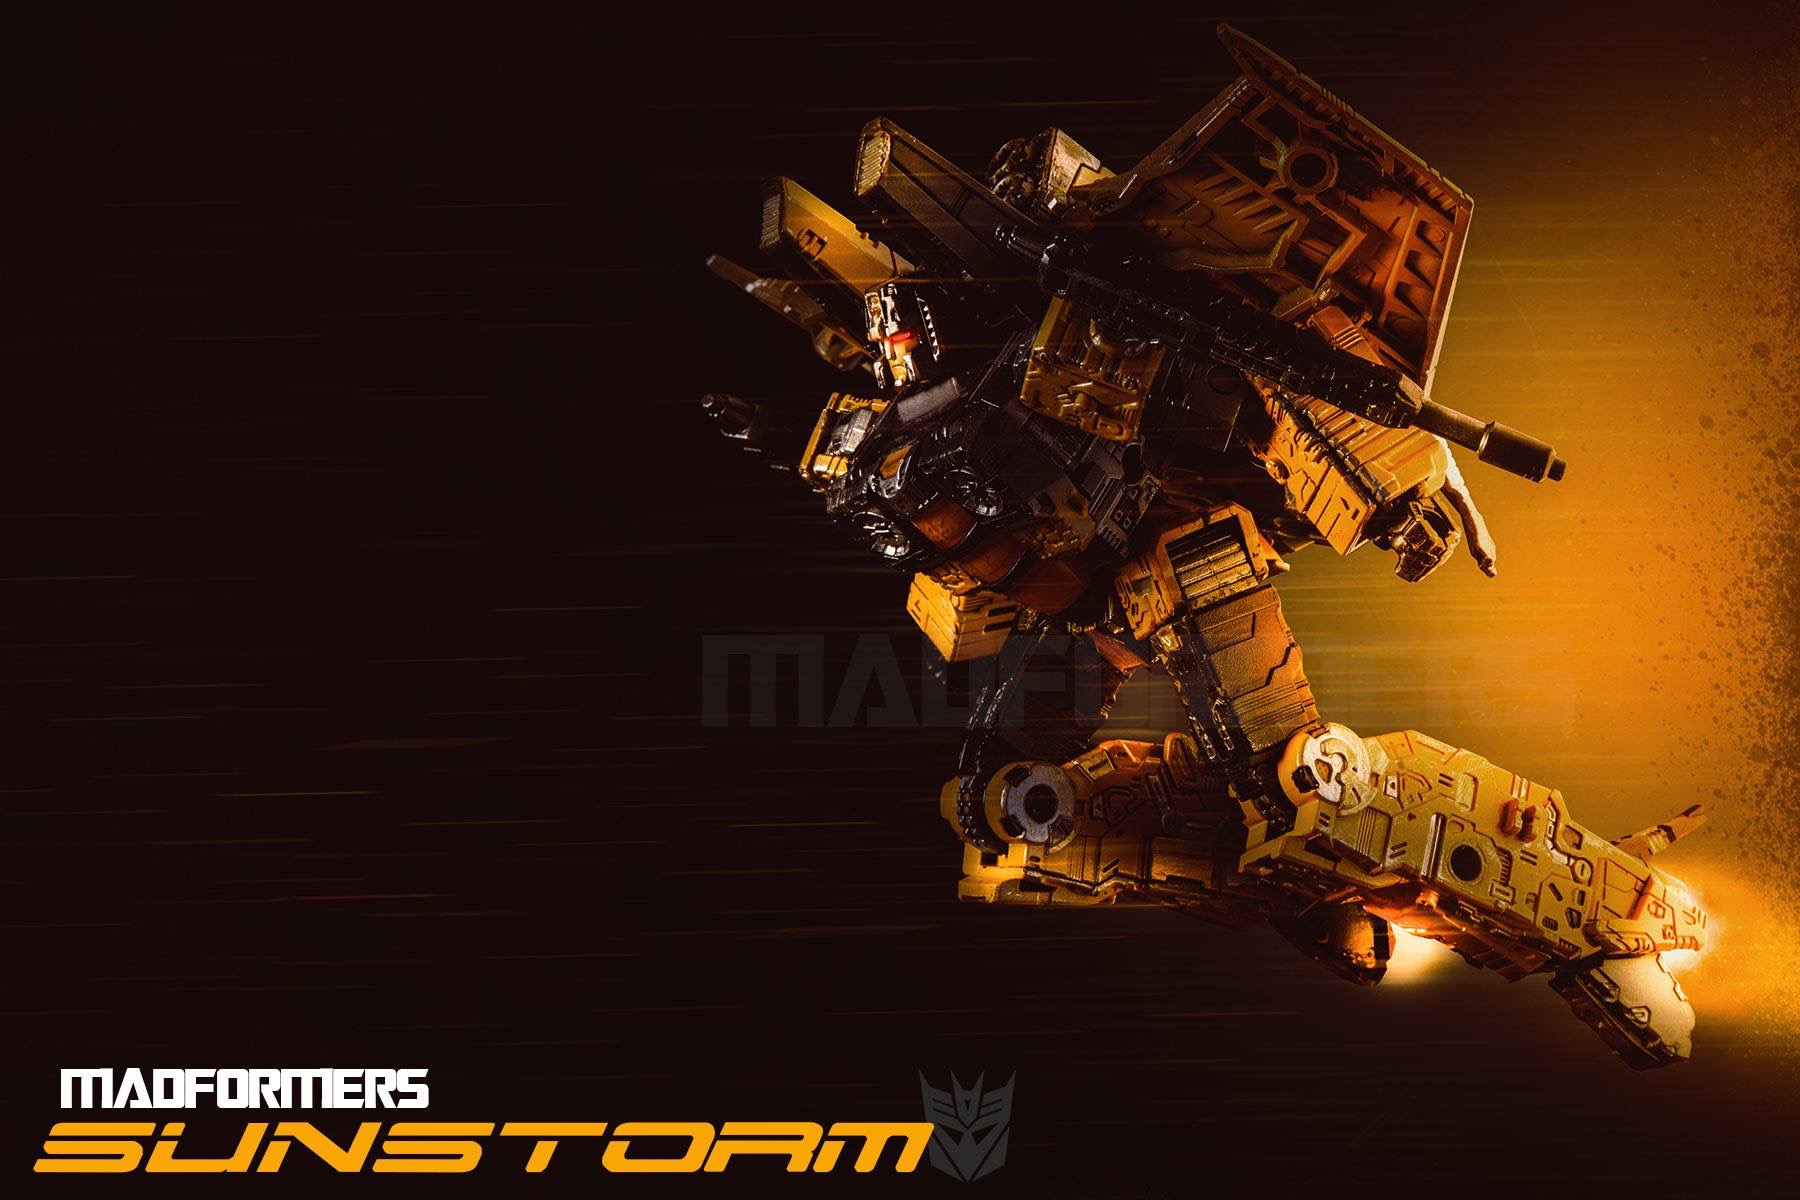 Fearstorm transformers prime  Transformers artwork, Transformers